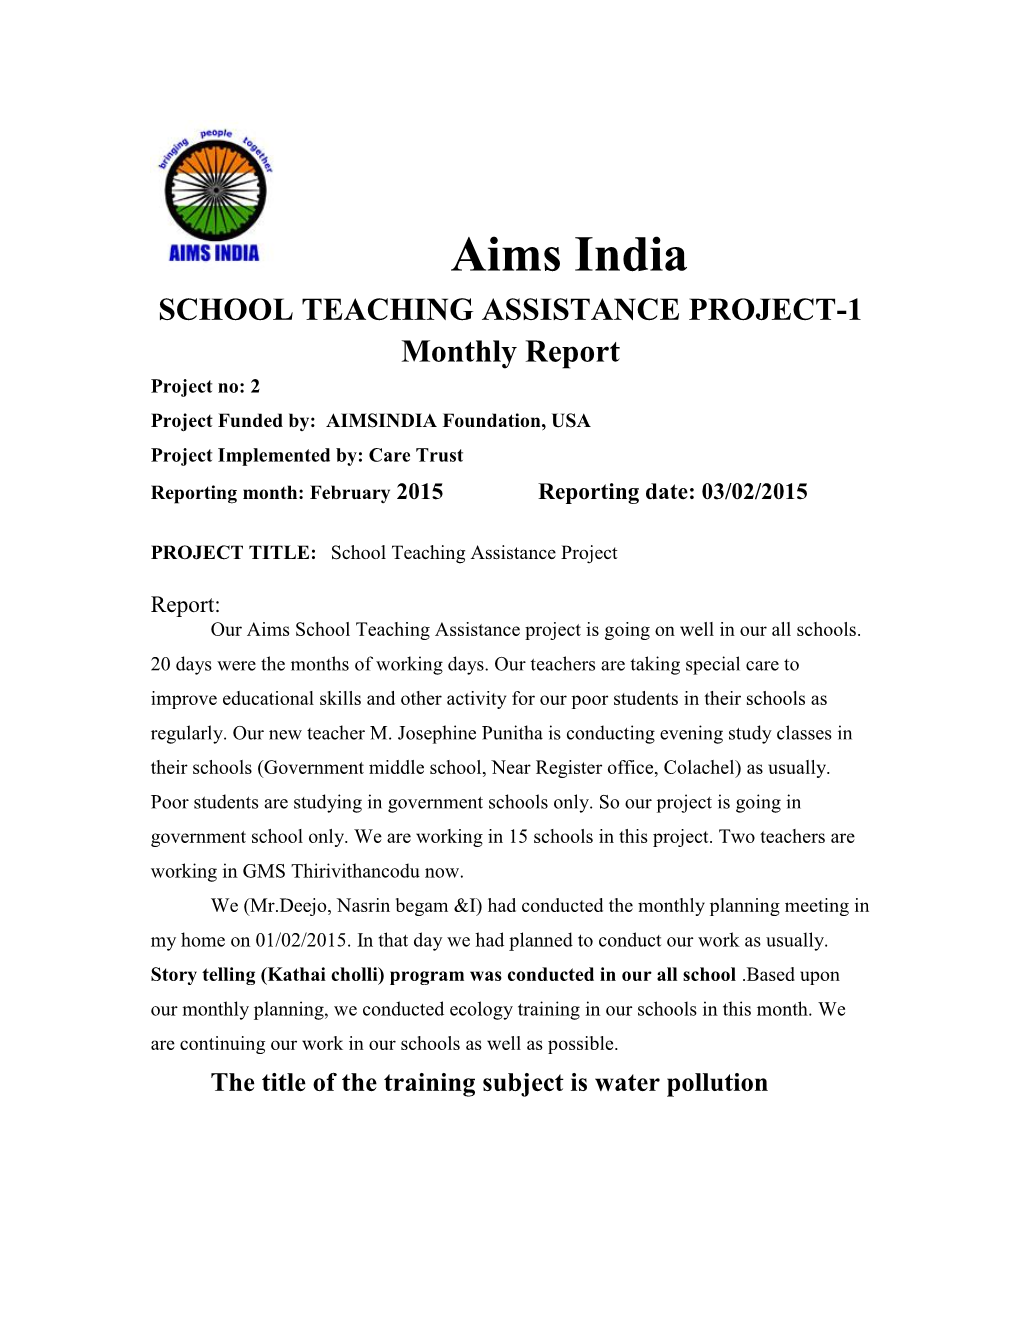 AIMS India Foundation